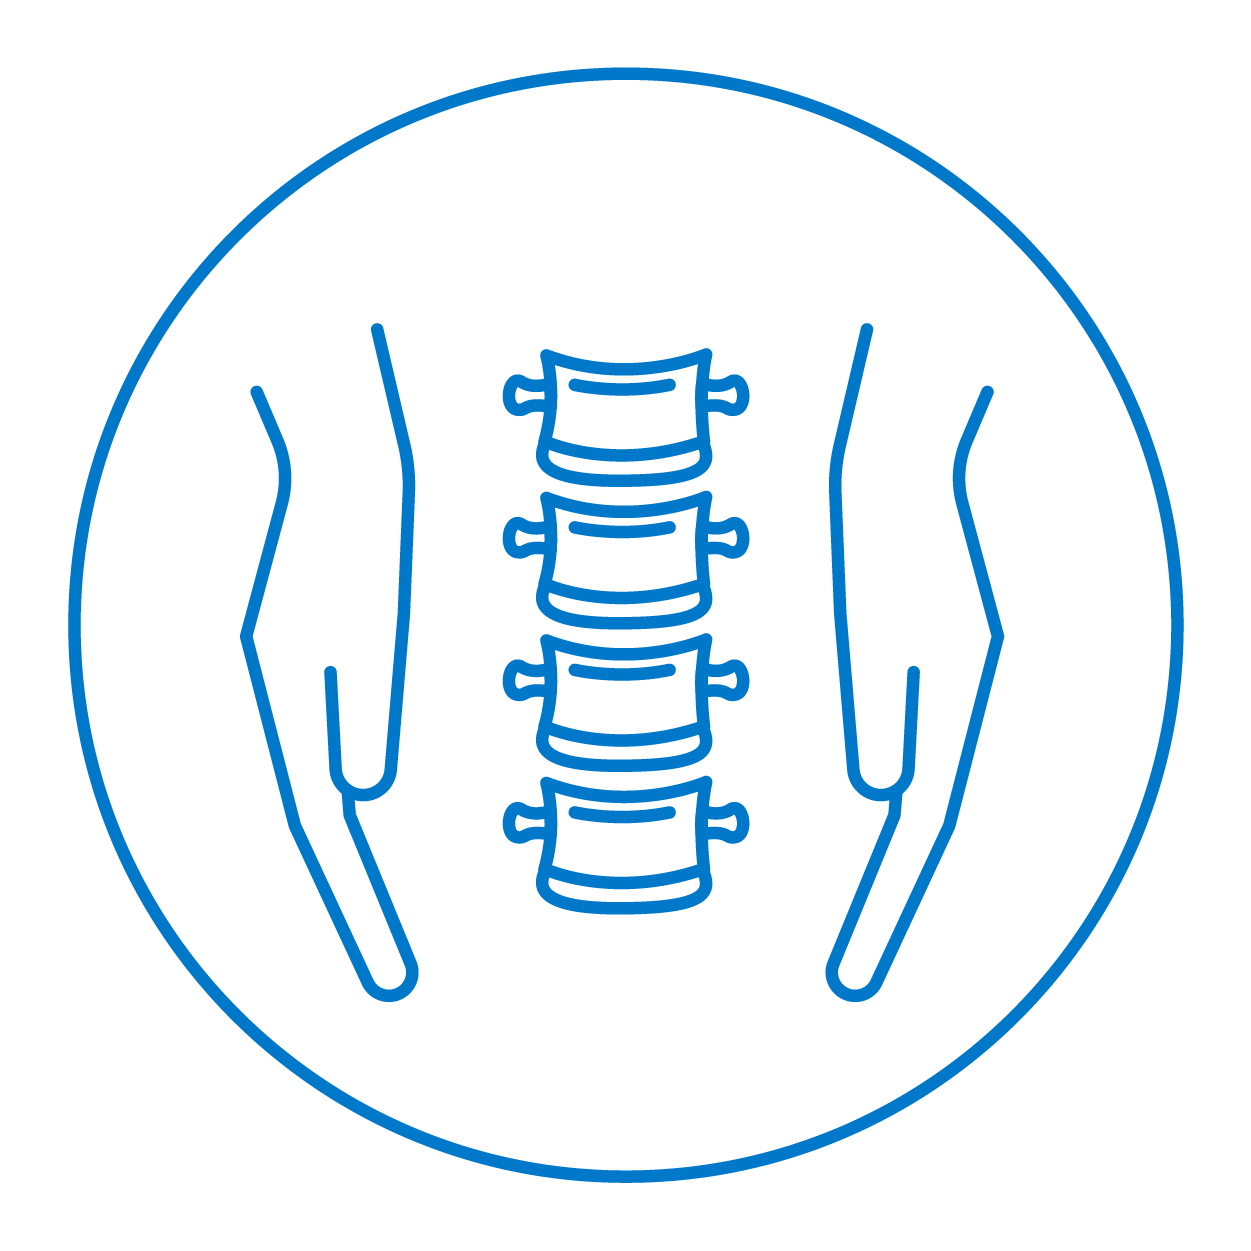 Spinal adjustment - Wikipedia